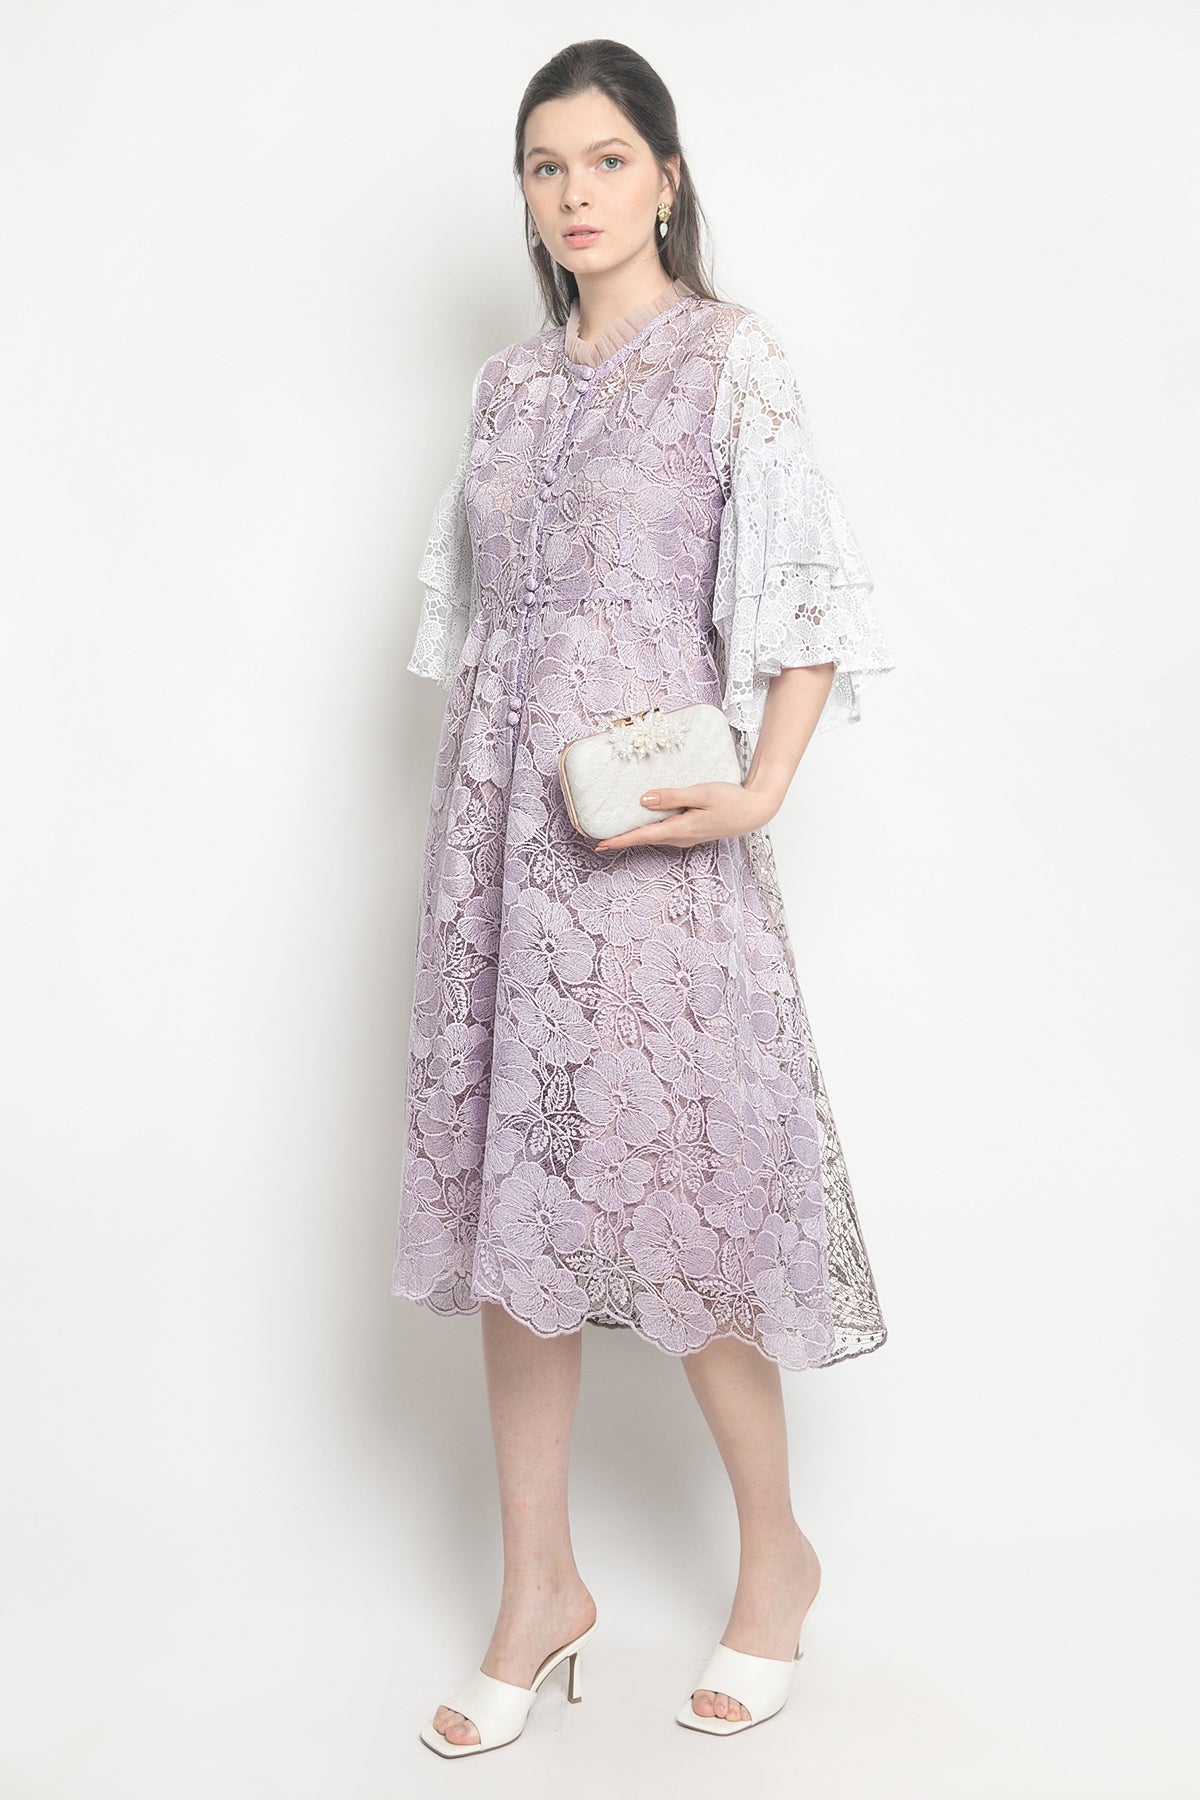 Karumi Dress in Soft Lavender